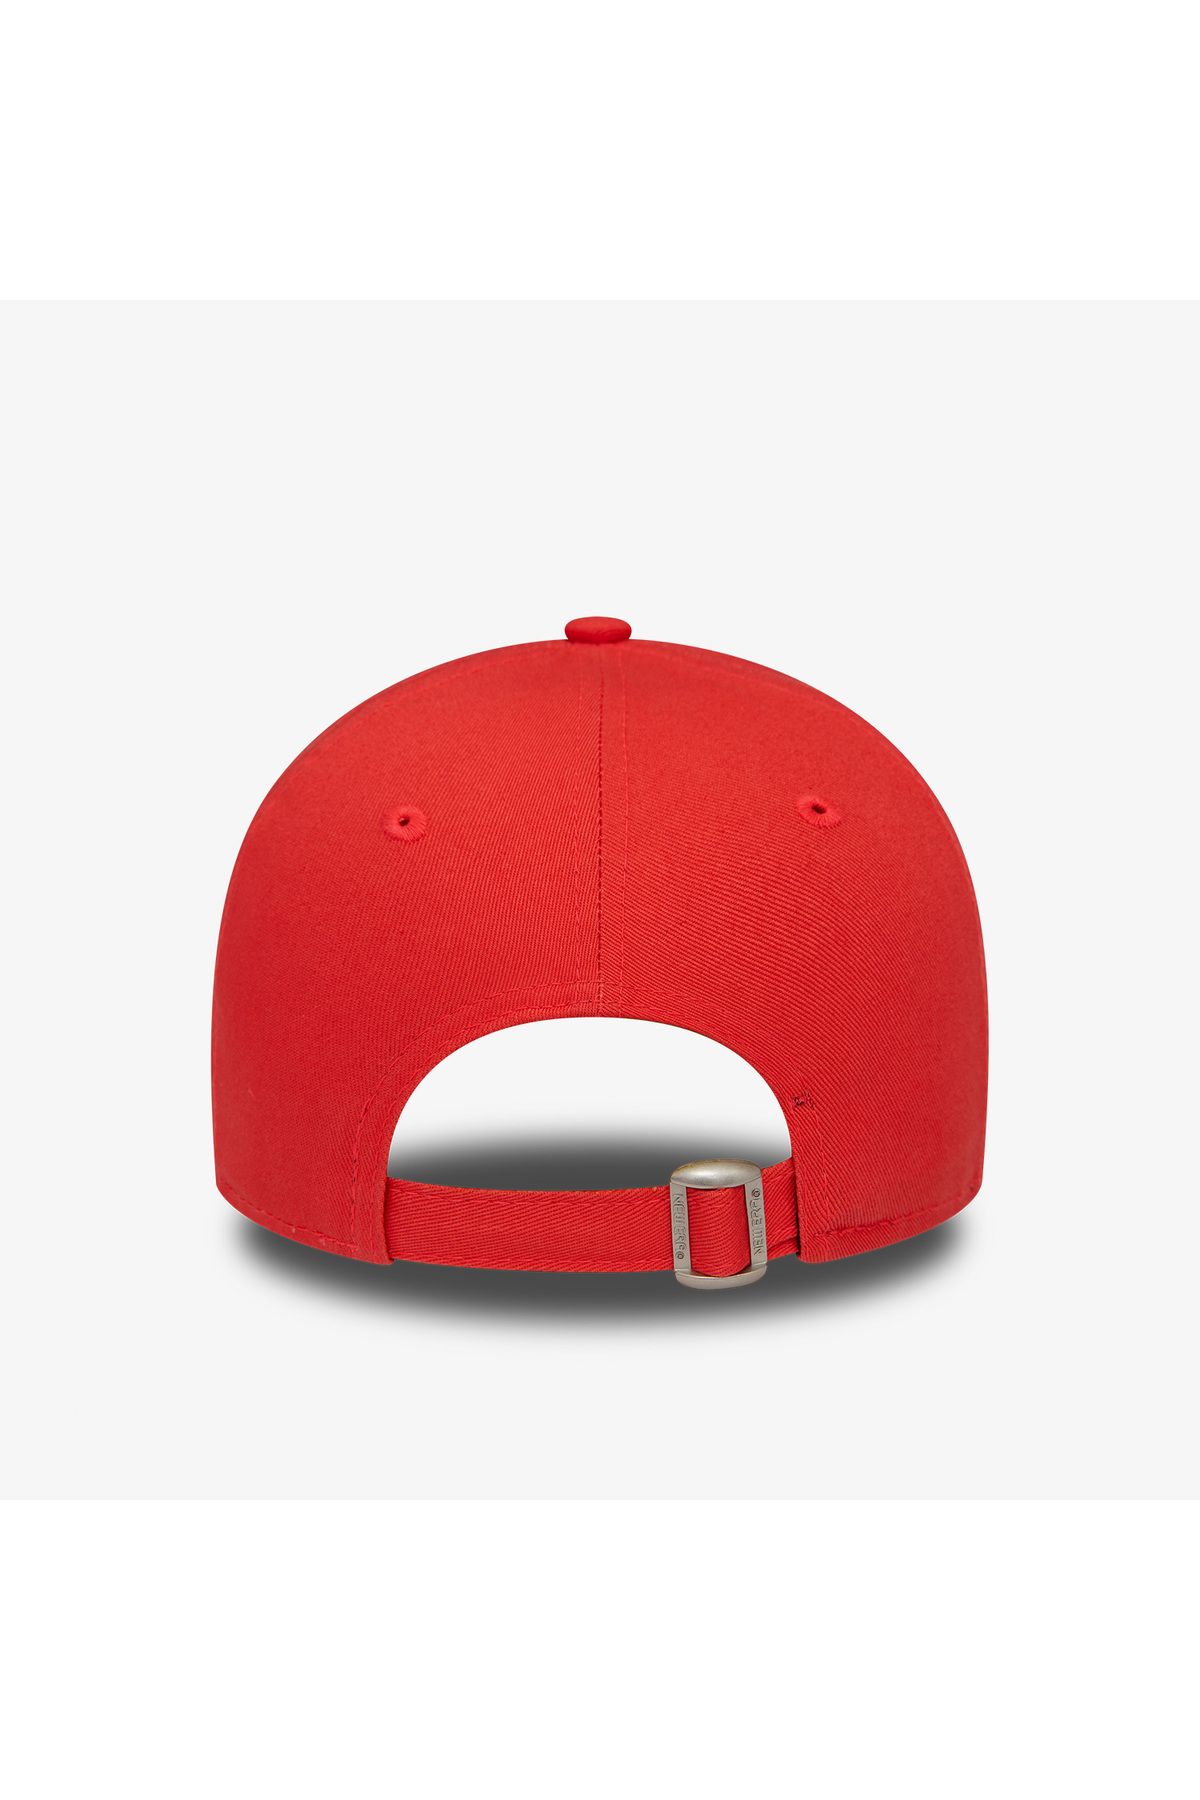 NEW ERA Casquette 9 چهل نیویورک Yankees Unisex Red Hat